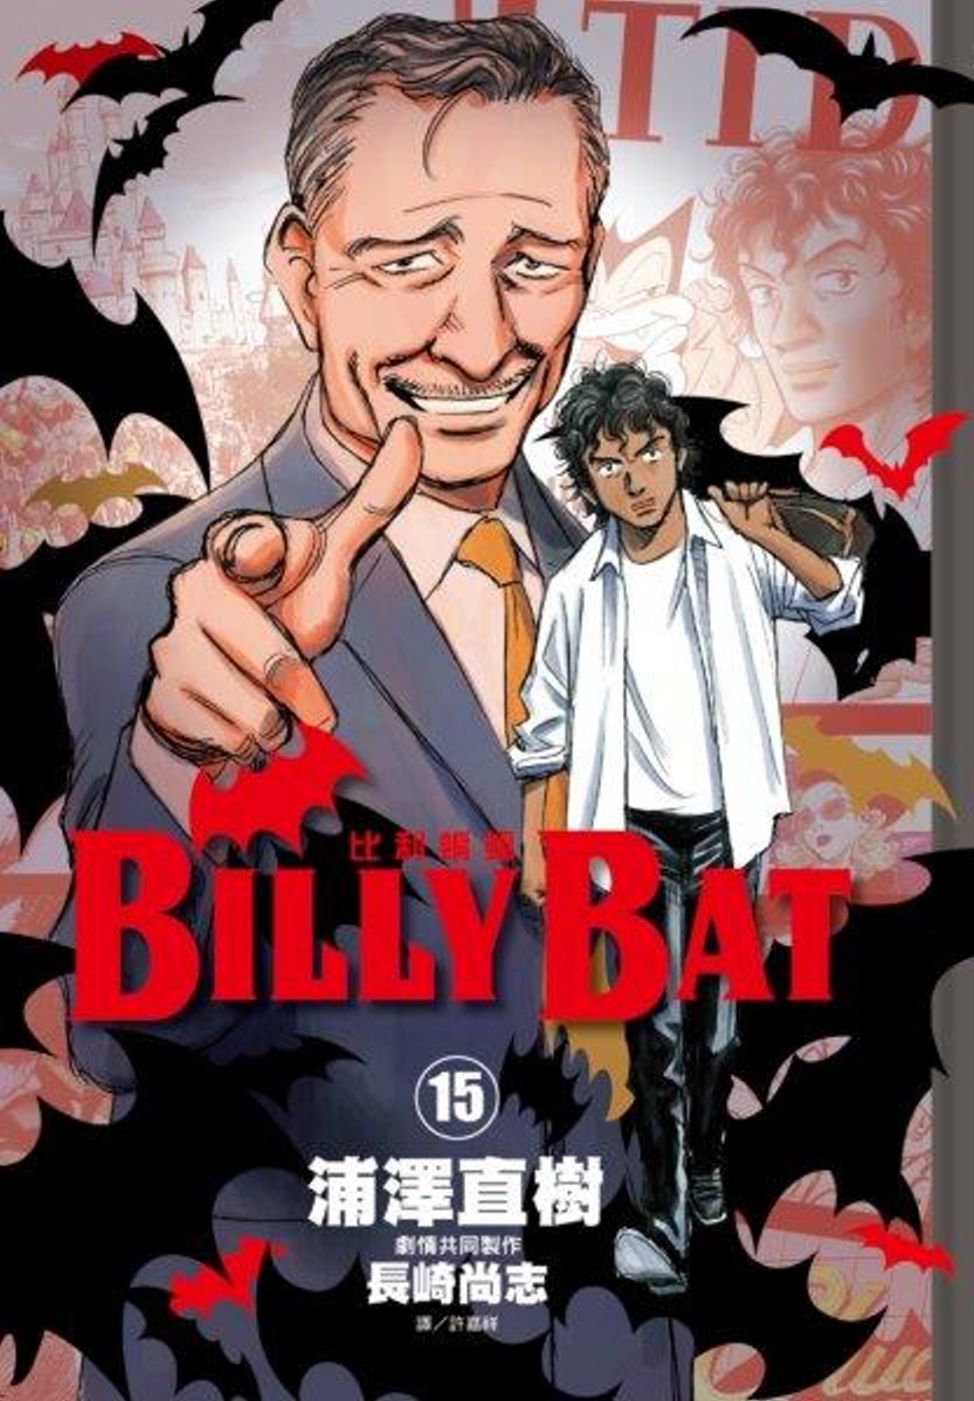 BILLY BAT比利蝙蝠(15)